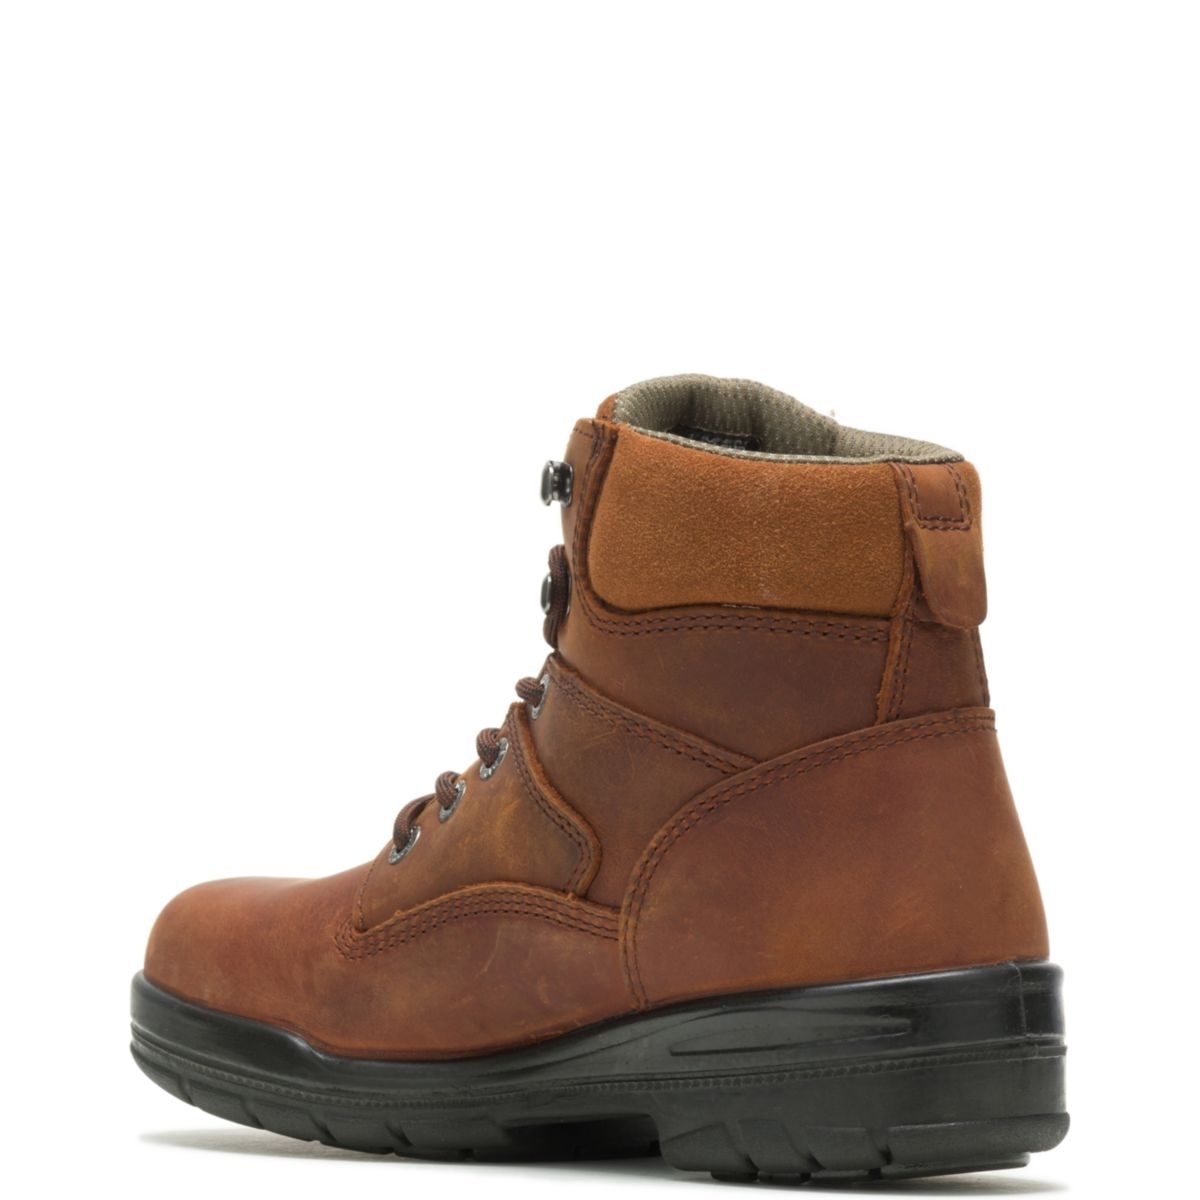 WOLVERINE Men's 6 DuraShocksÂ® Slip Resistant Steel Toe Work Boot Canyon - W02053 BRN/STL - BRN/STL, 7.5-M